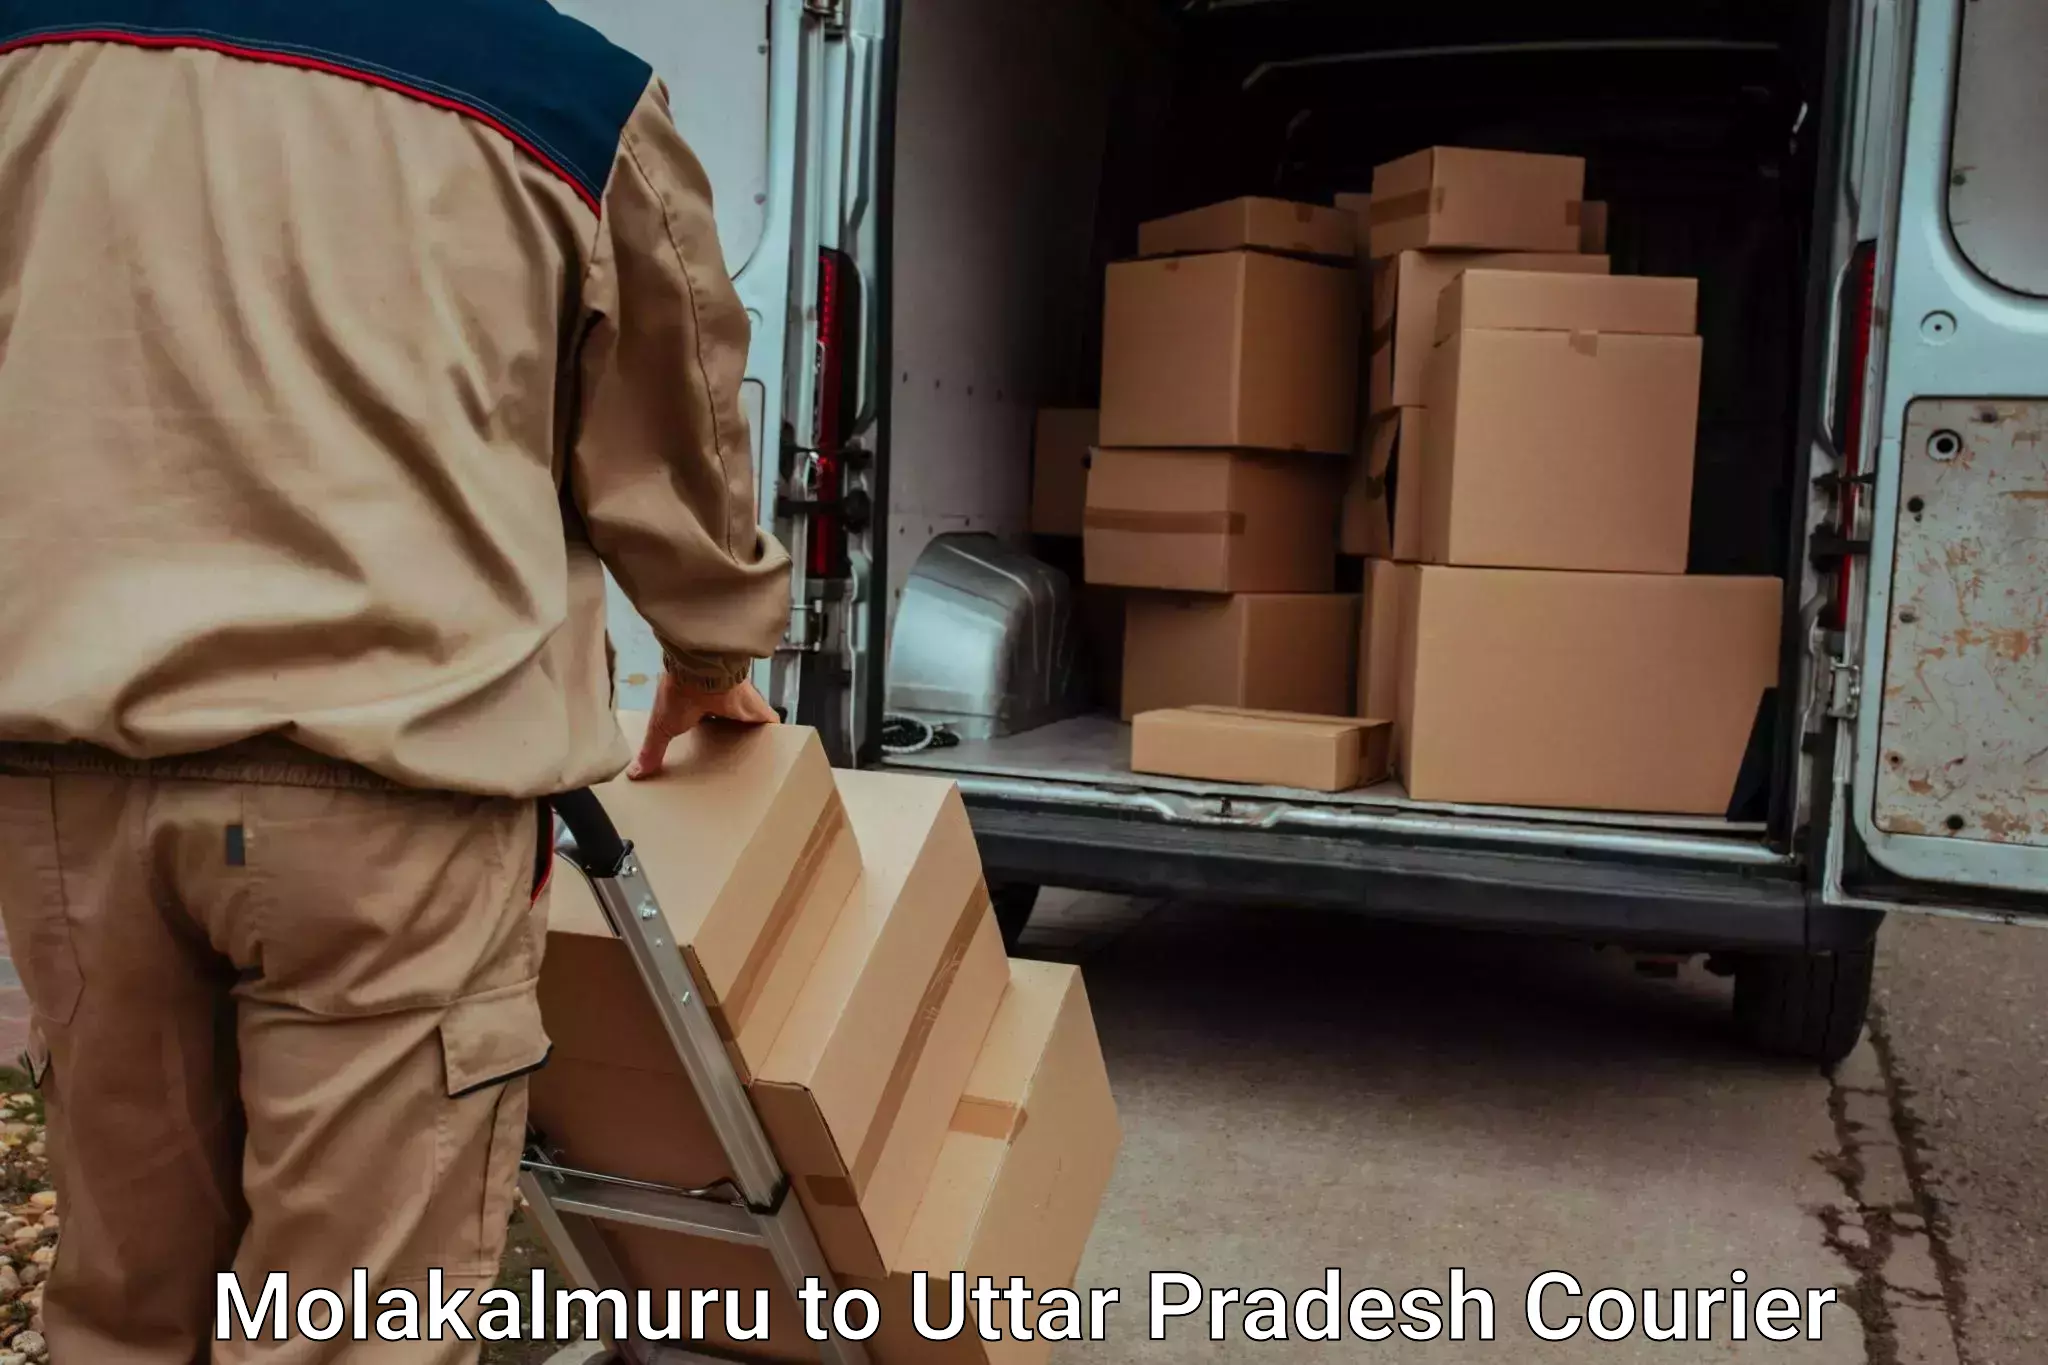 Doorstep luggage pickup in Molakalmuru to Agra